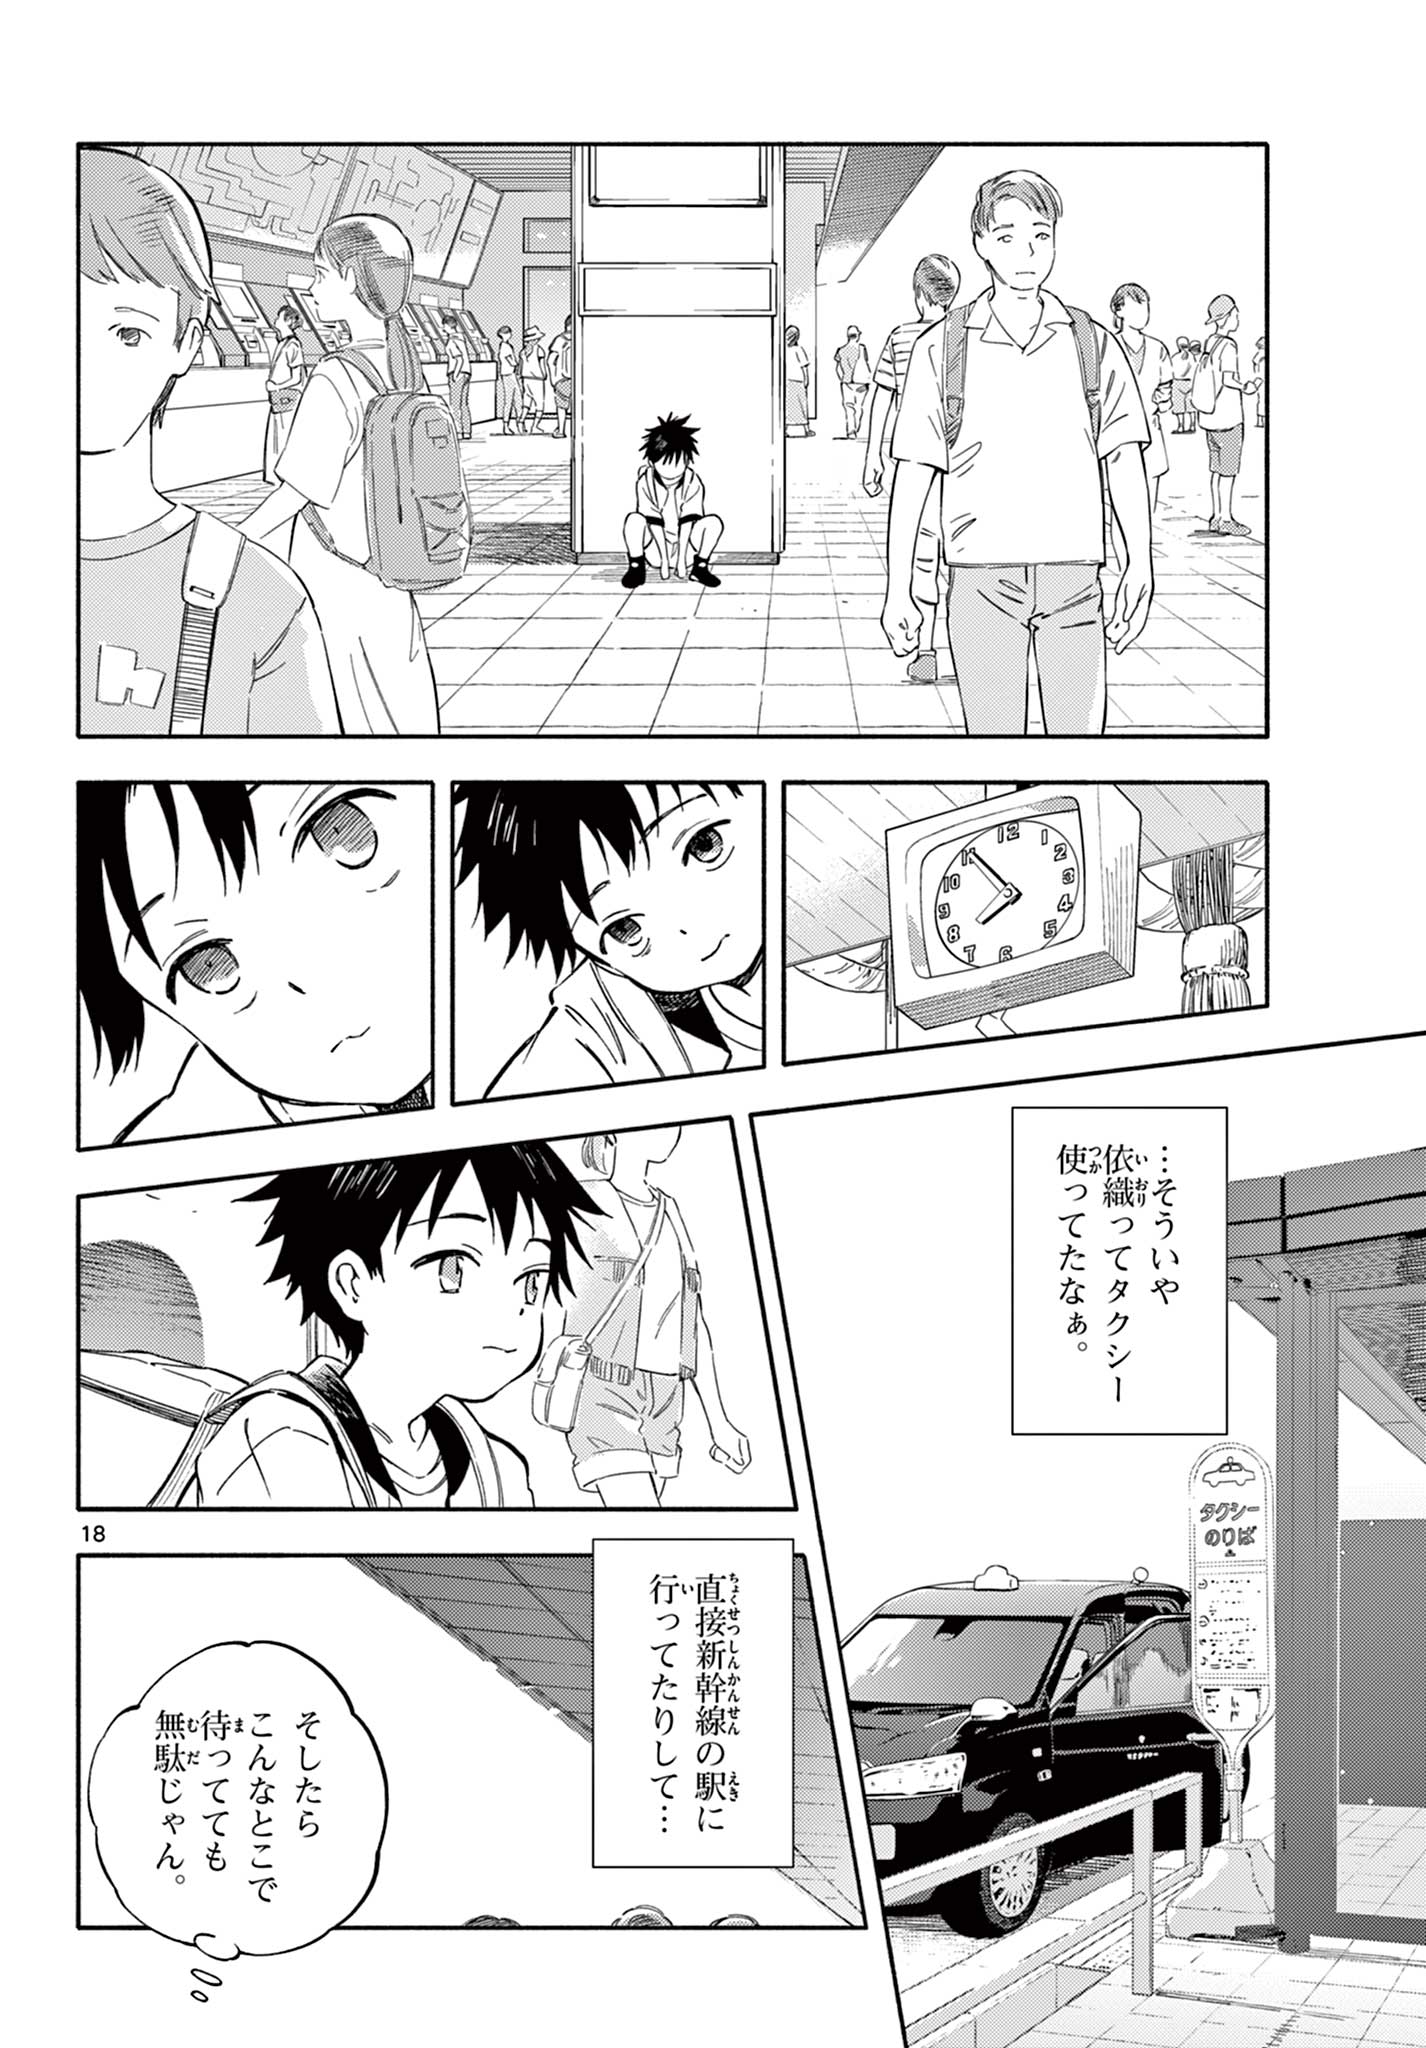 Nami no Shijima no Horizont - Chapter 13.1-2 - Page 6